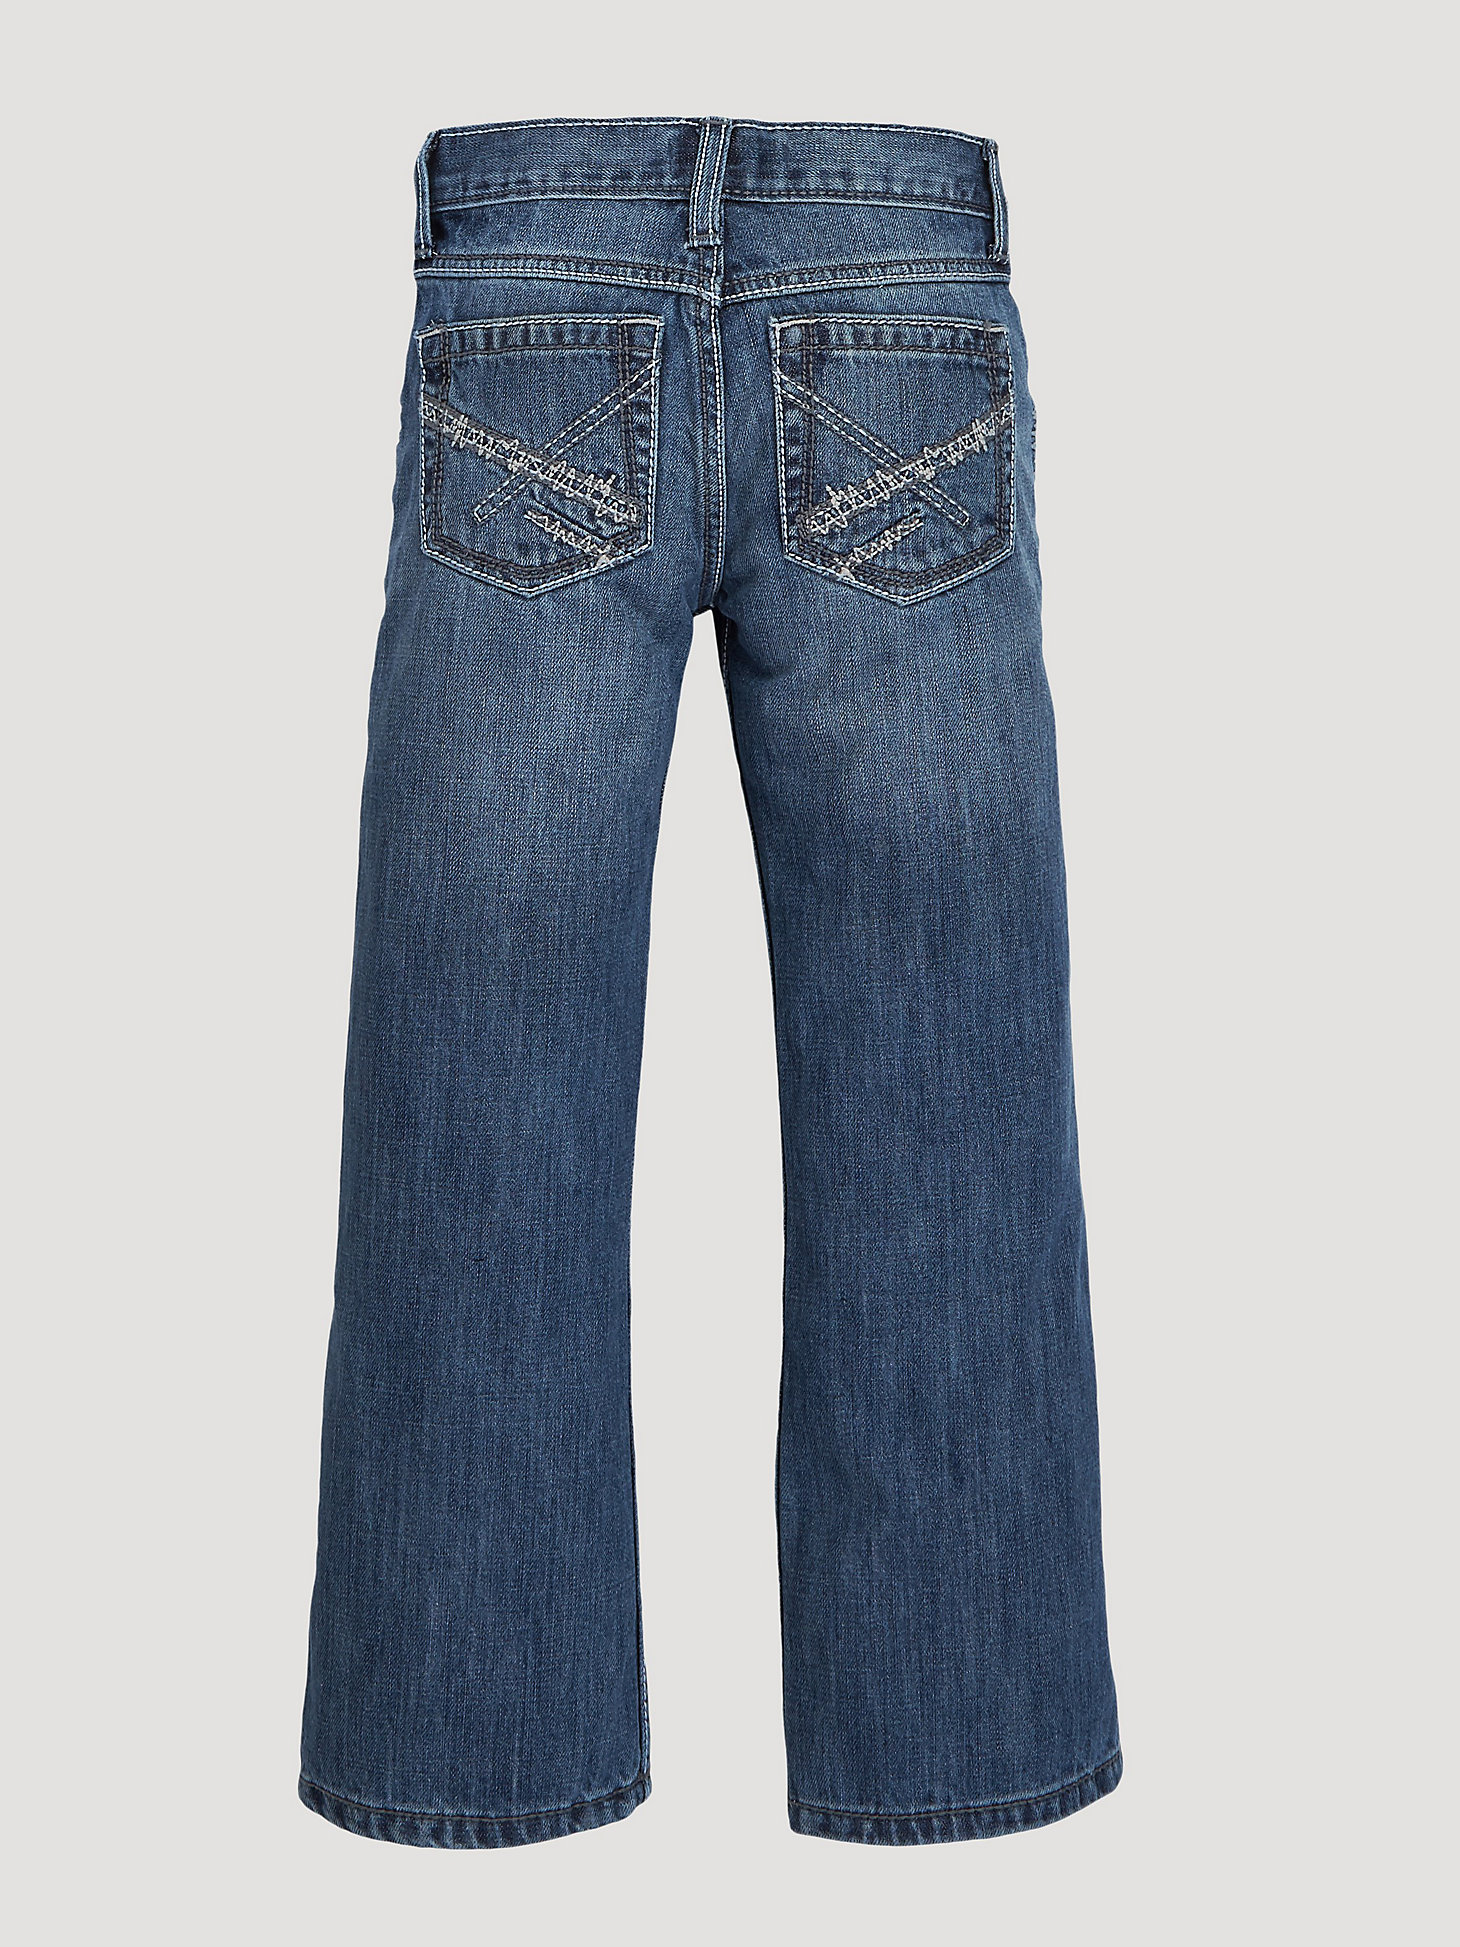 Boy's Wrangler® 20X® Vintage Bootcut Slim Fit Jean (8-20) in Breaking Barriers alternative view 1